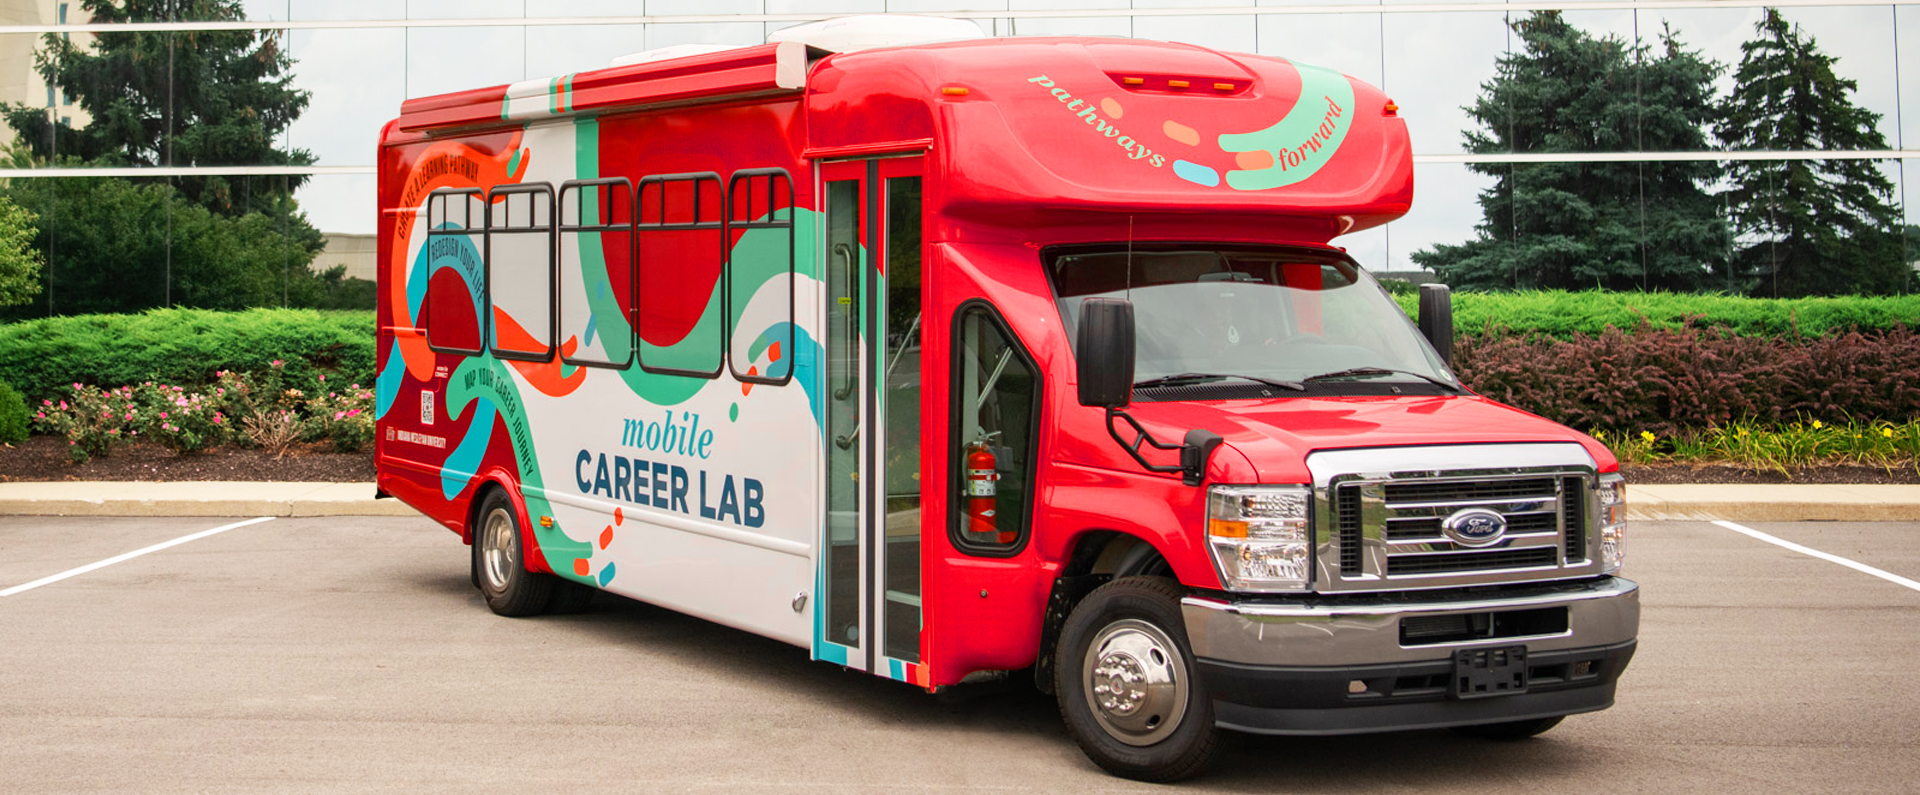 Mobile Career Lab Bus